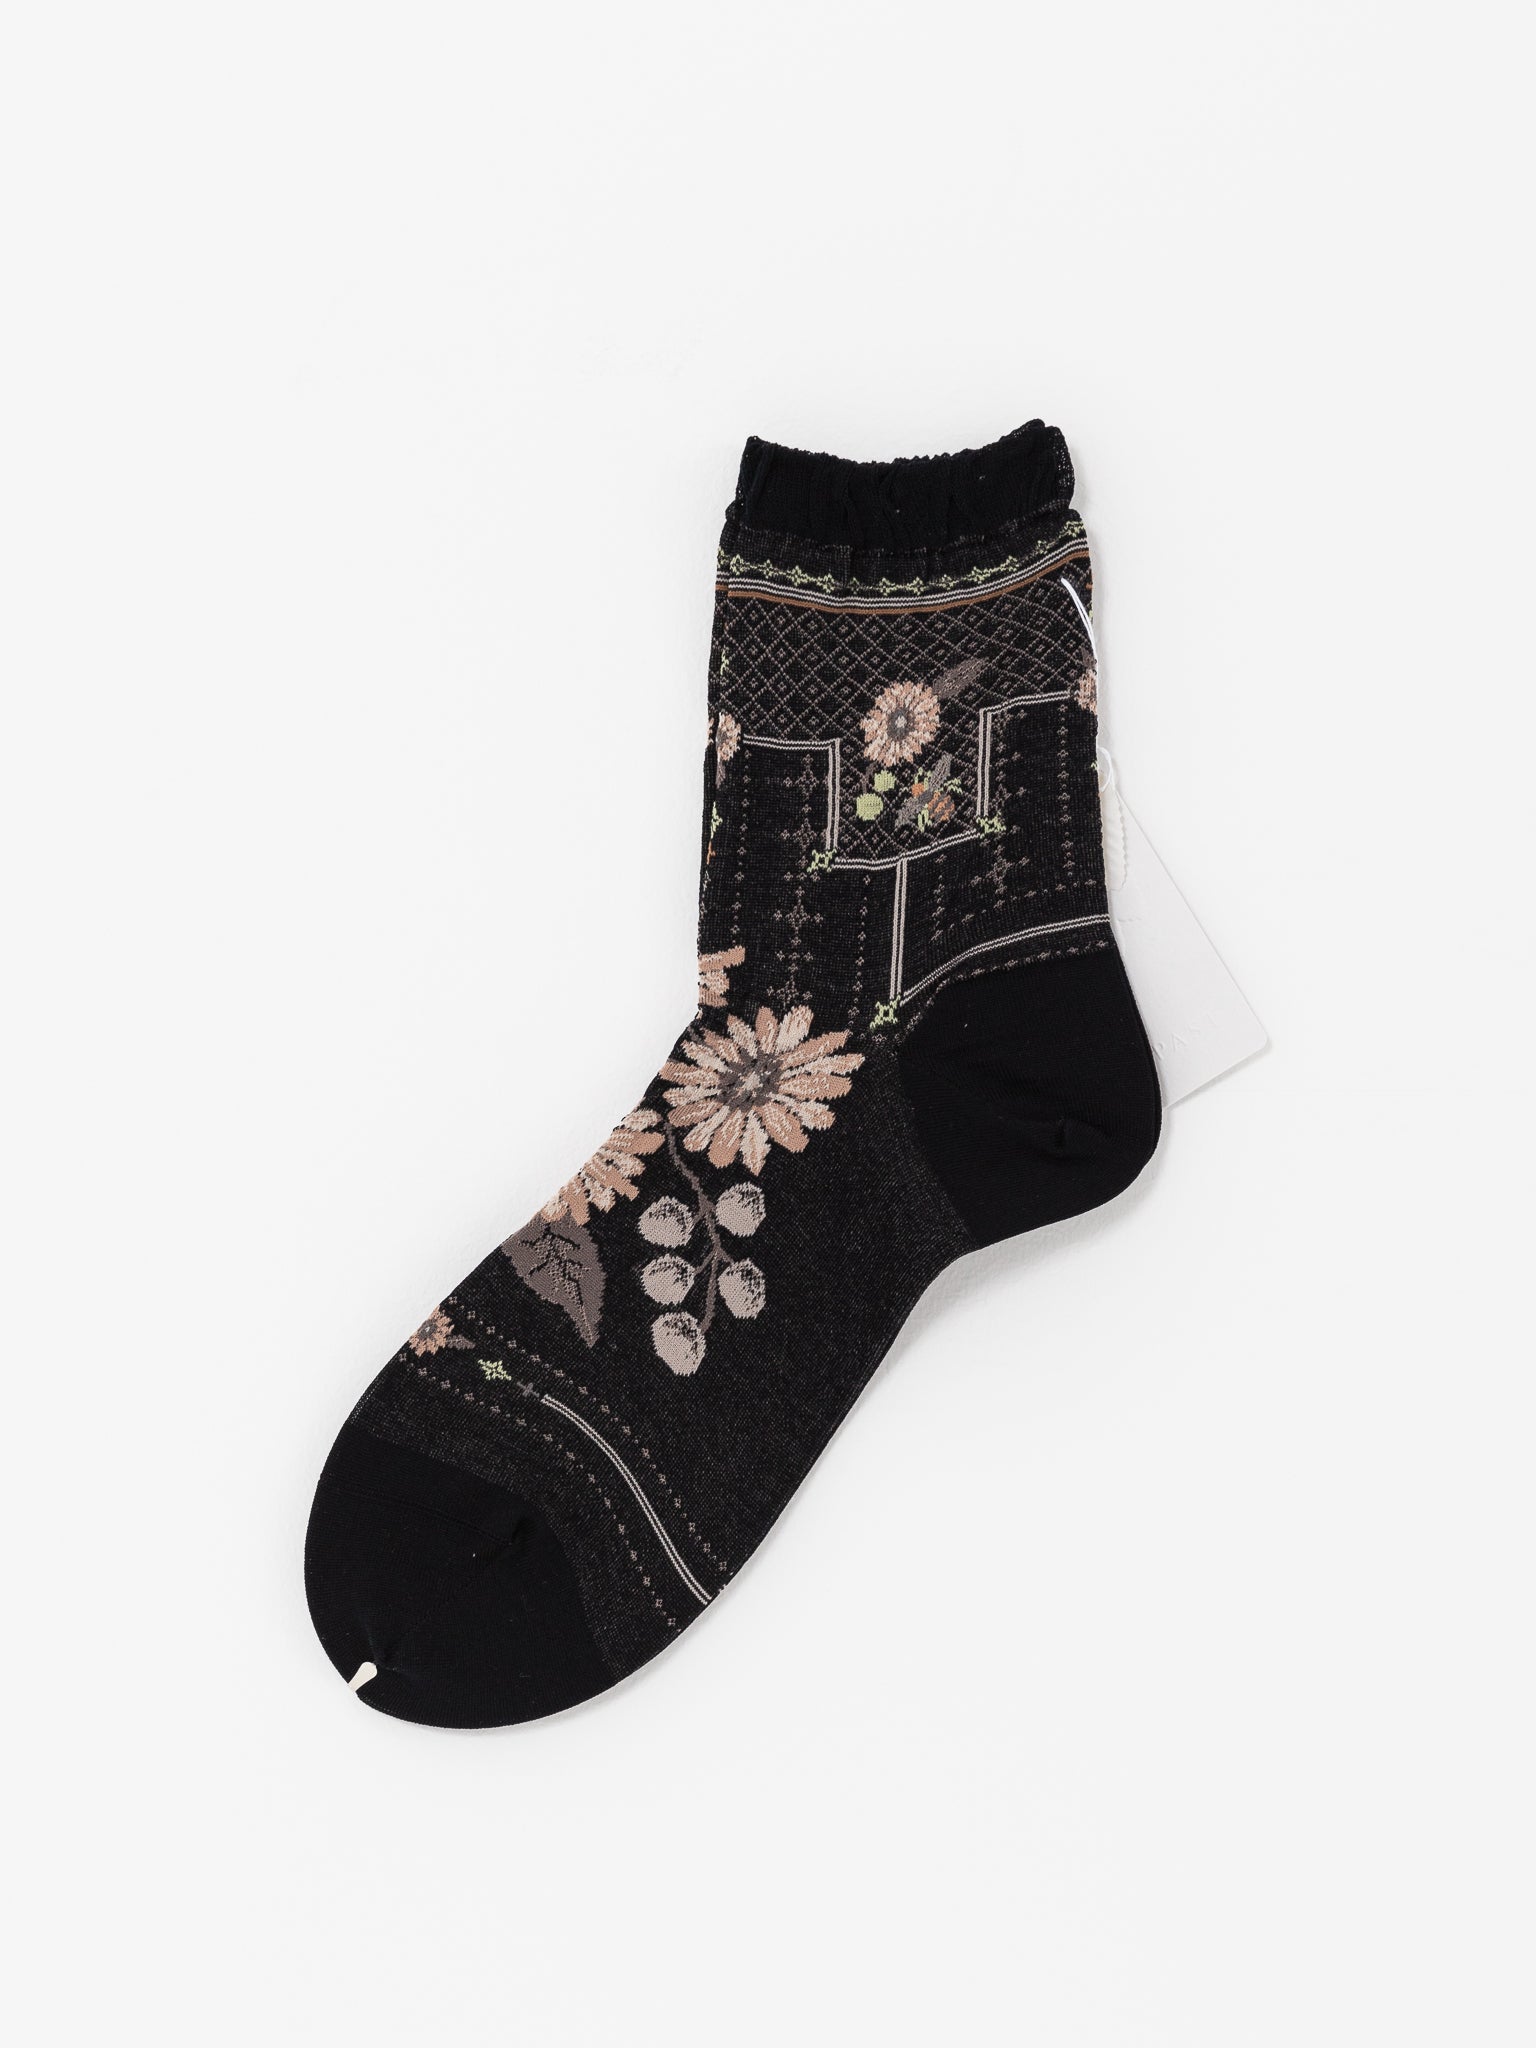 Antipast Gerbera Ankle Socks, Black - Worthwhile